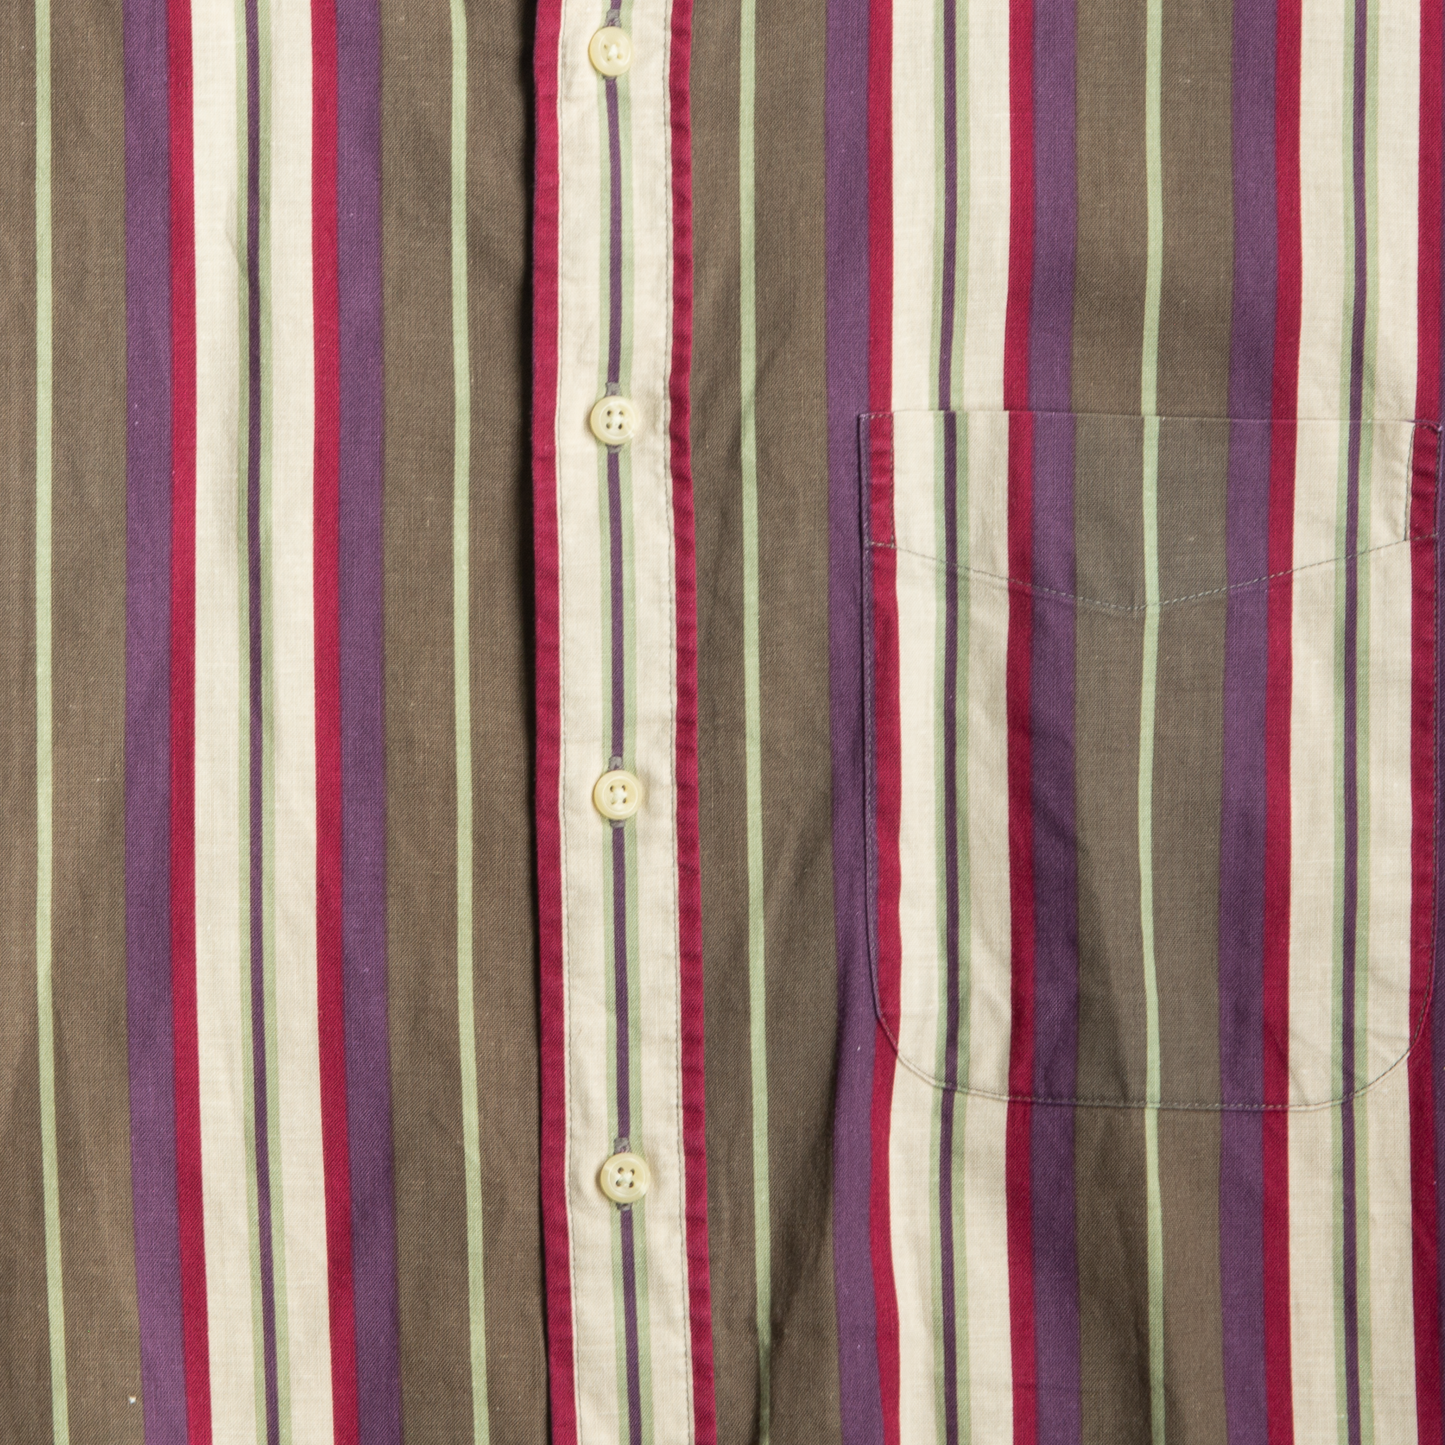 90s Vertical Stripe- Green, Purple, Burgundy Short Sleeve Button Up